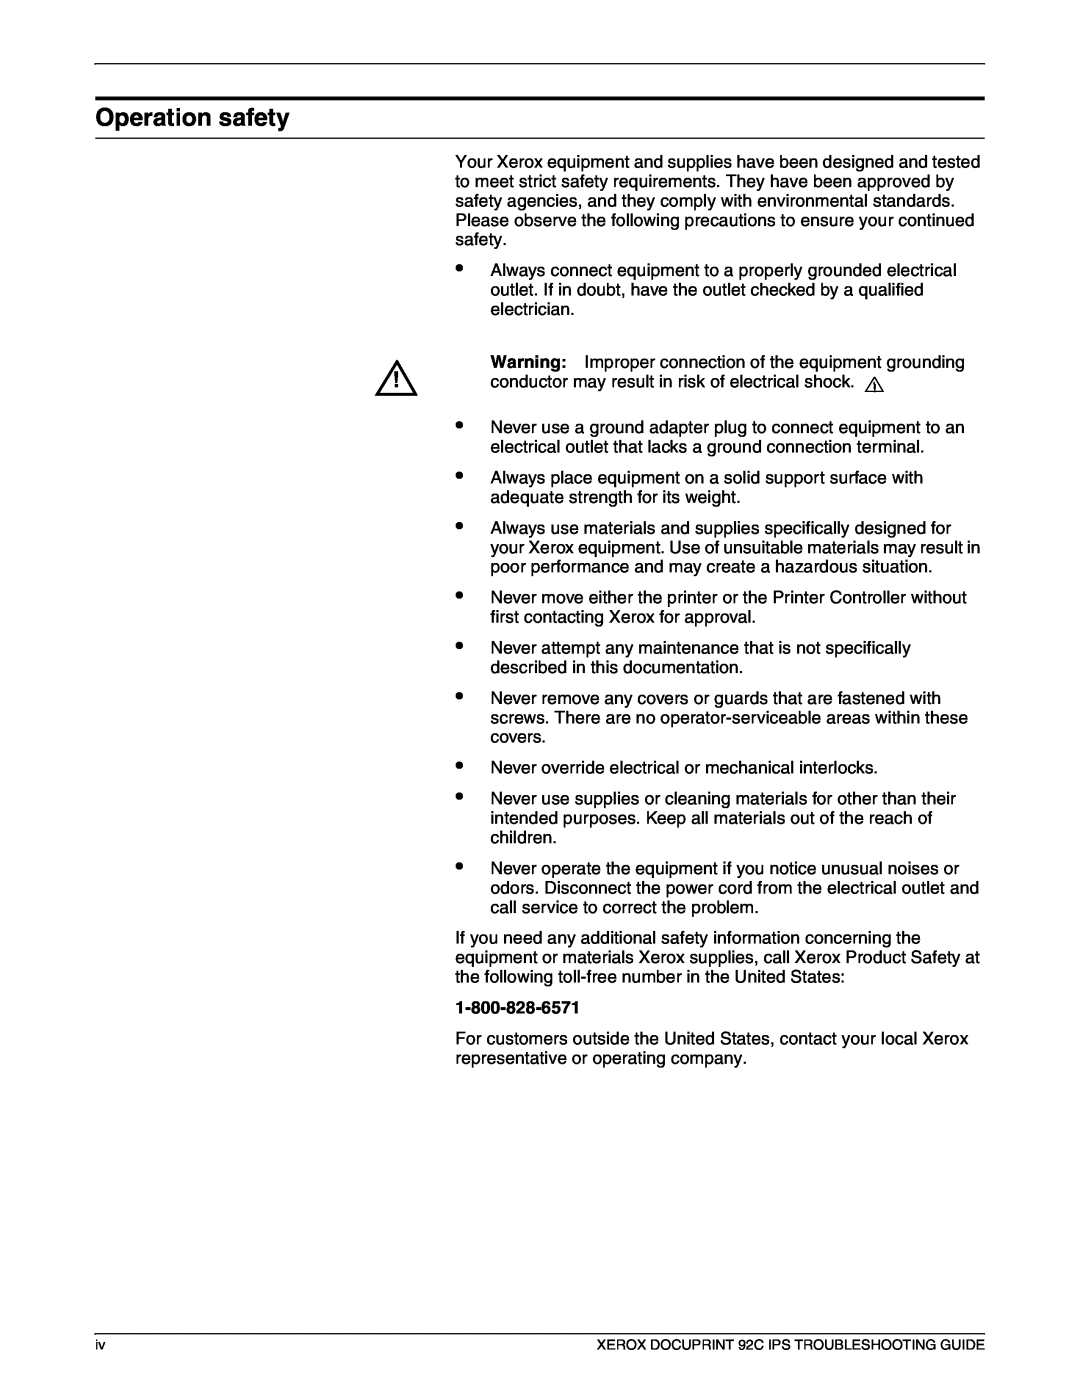 Xerox 92C IPS manual Operation safety 